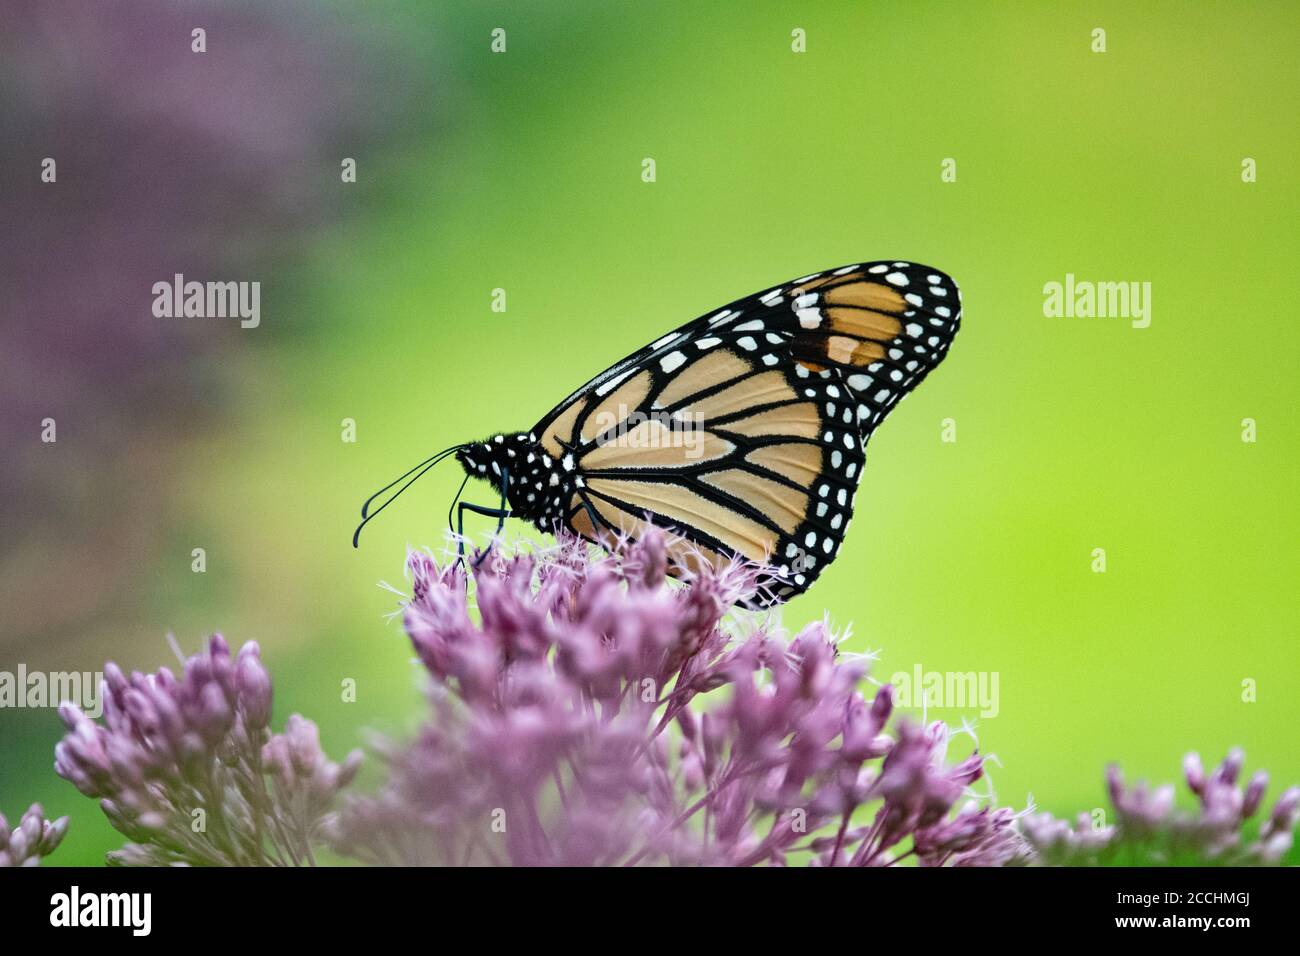 A Monarch Butterfly, Danaus plexippus, feeding on Joe-Pye Weed flowers in a garden in Speculator, NY USA Stock Photo